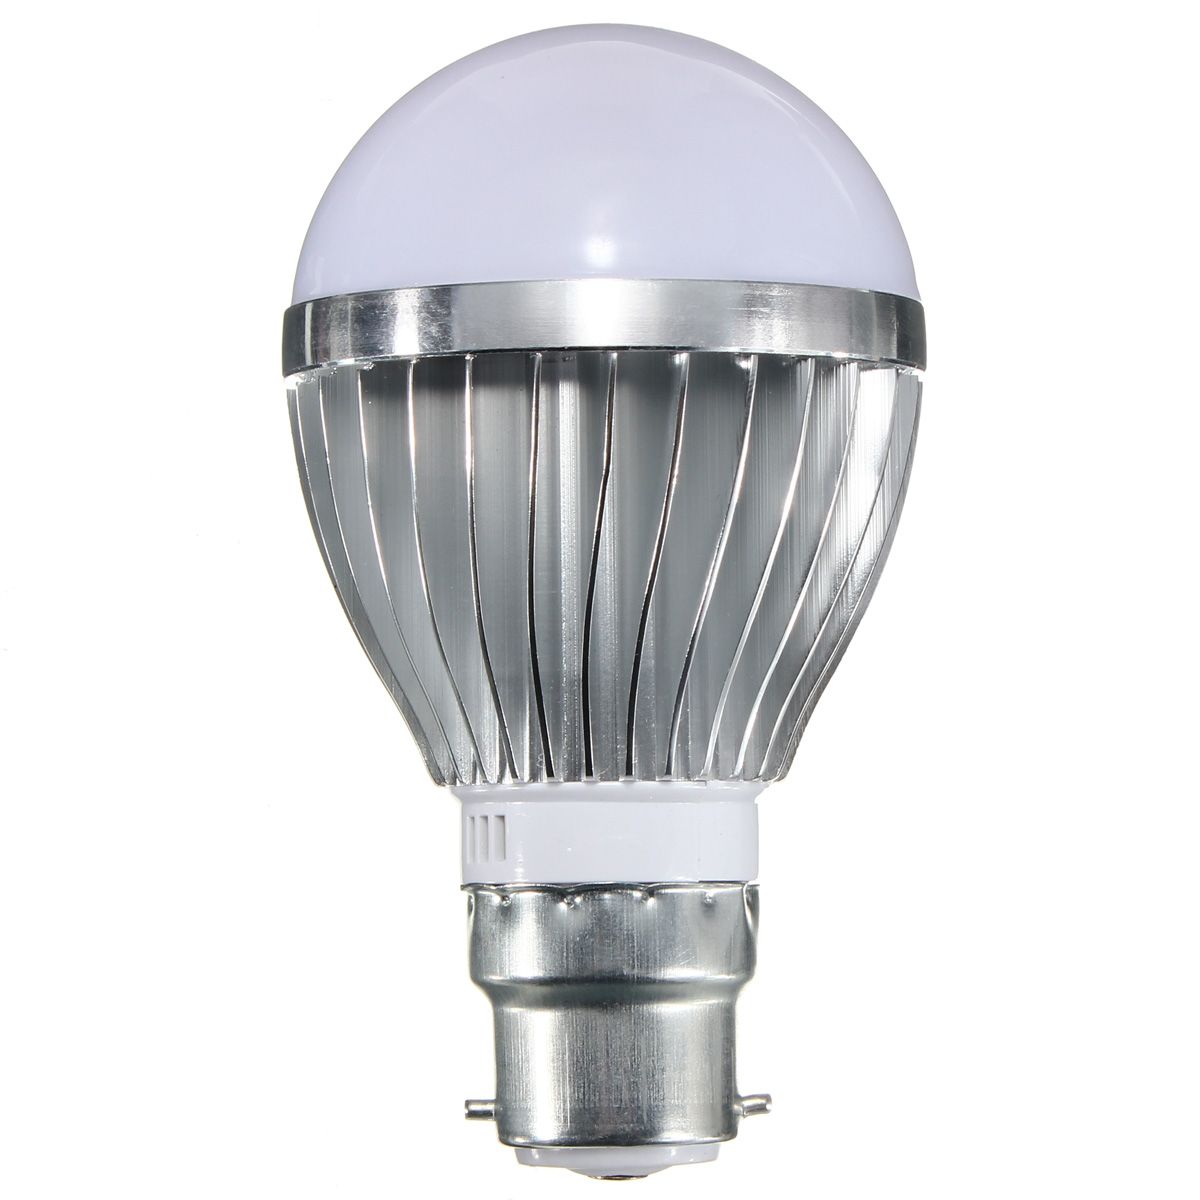 E27-B22-7W-Dimmable-10-SMD5730-LED-Bayonet-Edison-Bulb-Lamp-Globe-Light-Warm-White-AC-110-240V-1029117